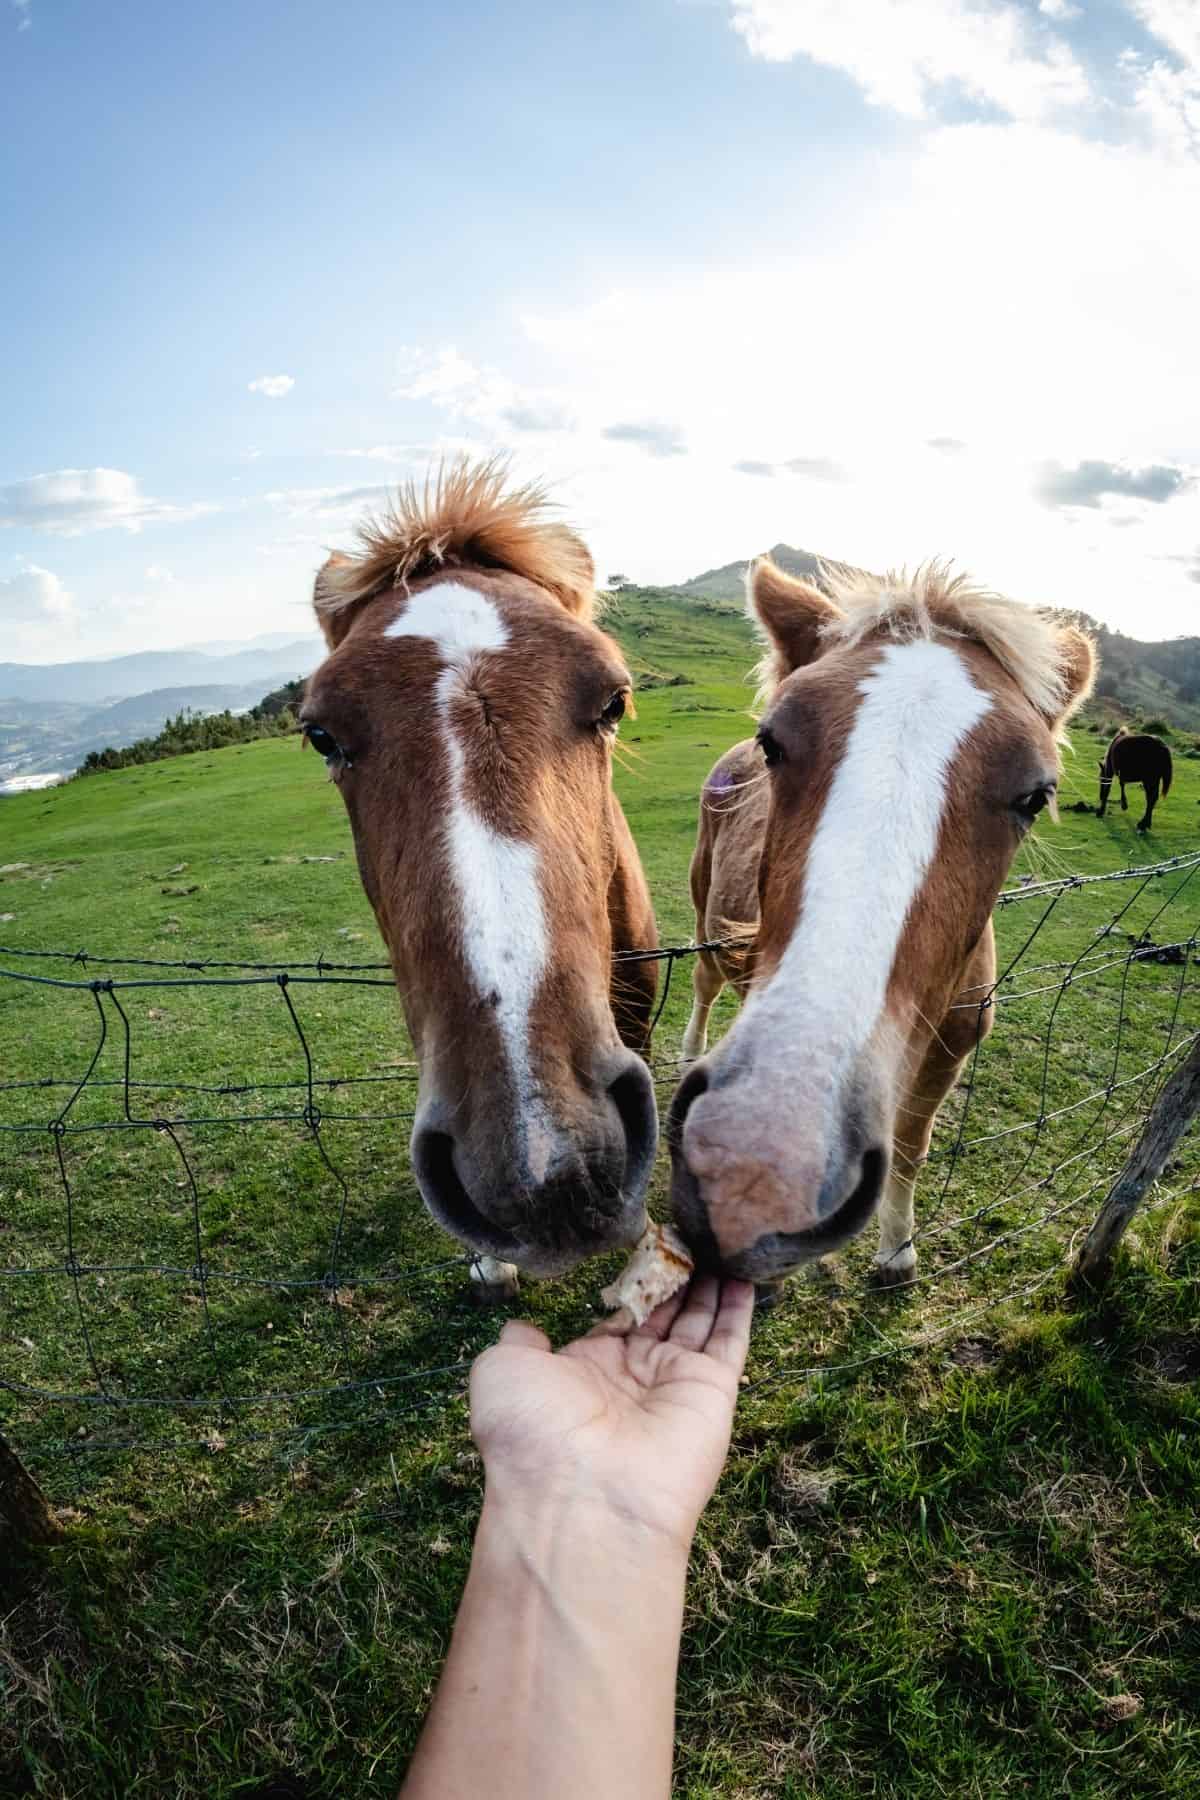 Two horses feeding